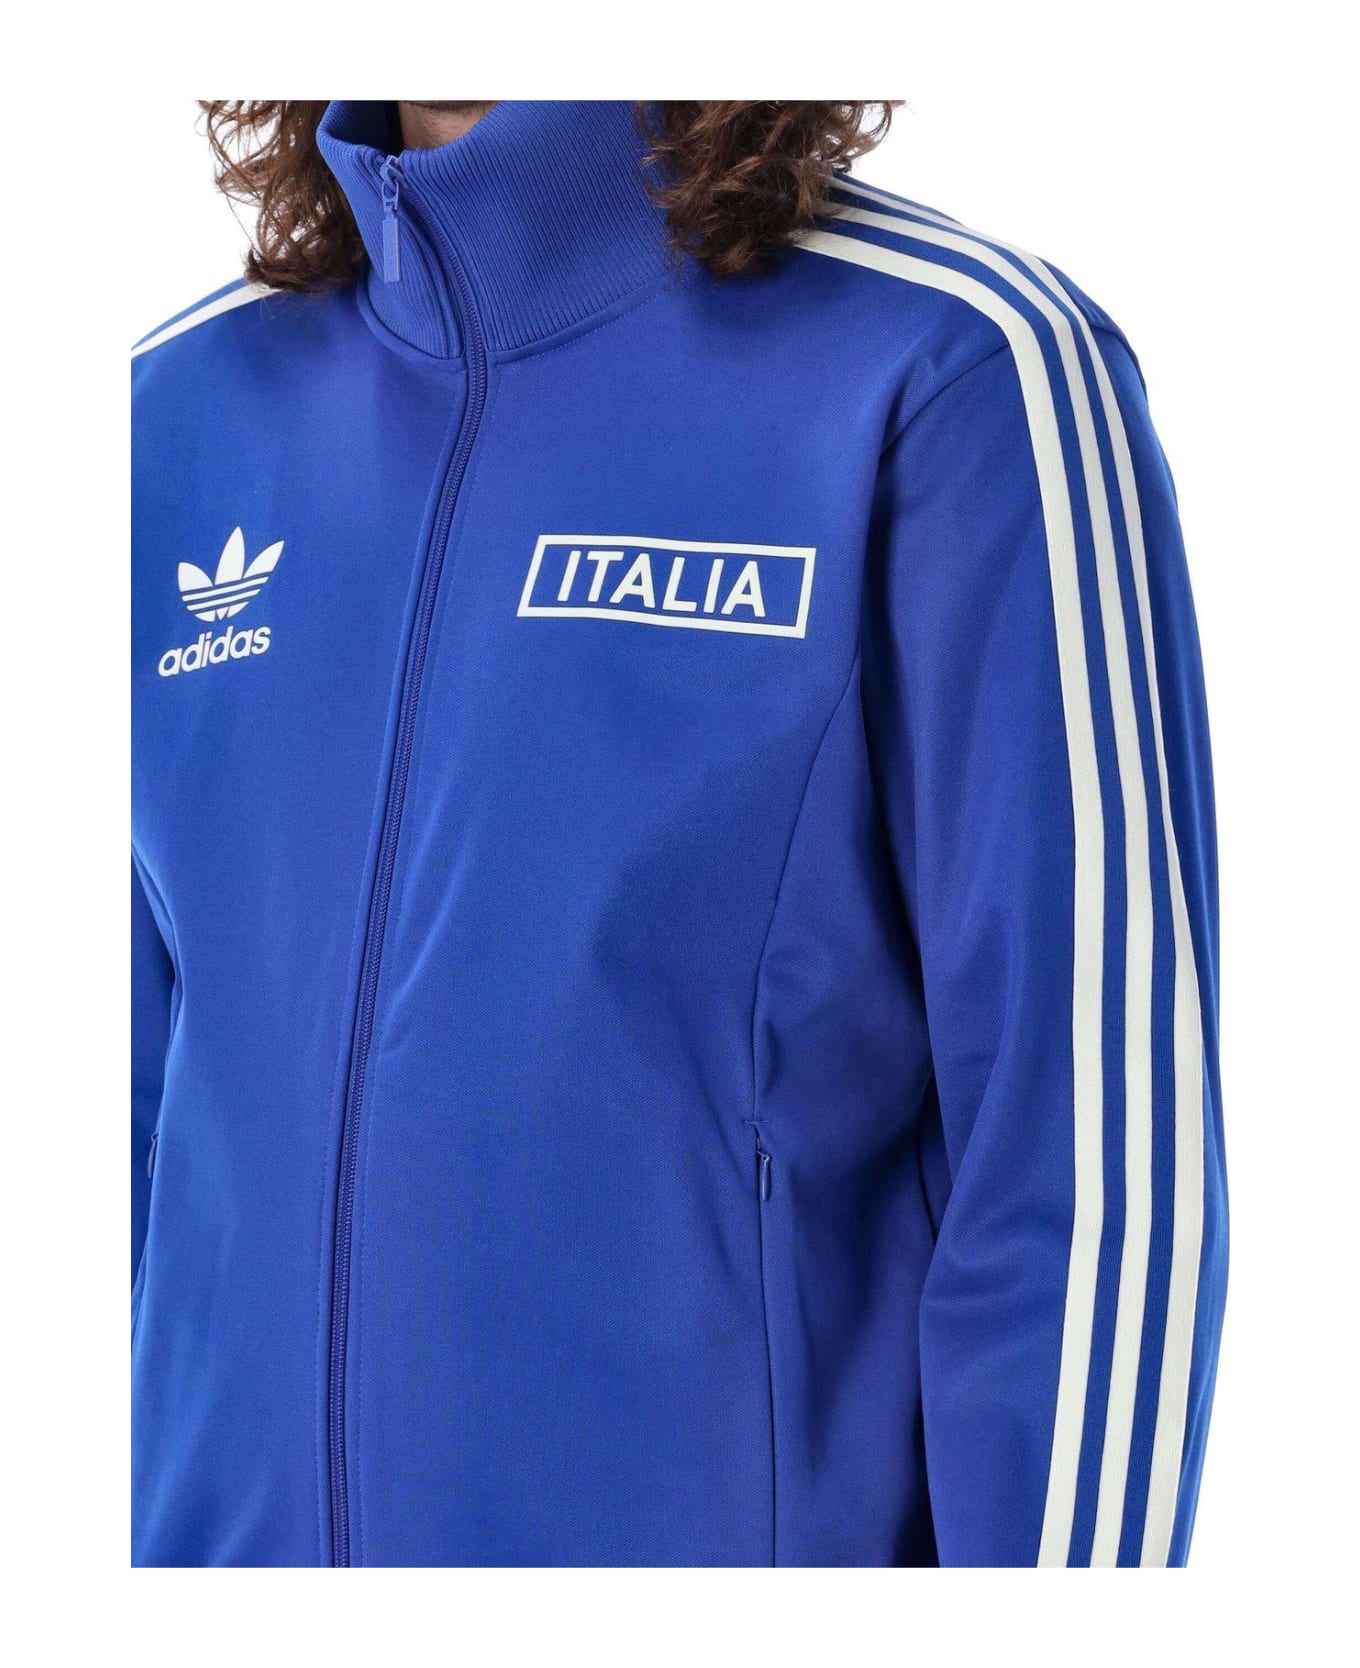 Adidas Originals Zip-up High Neck Sweatshirt - Gnawed Blue